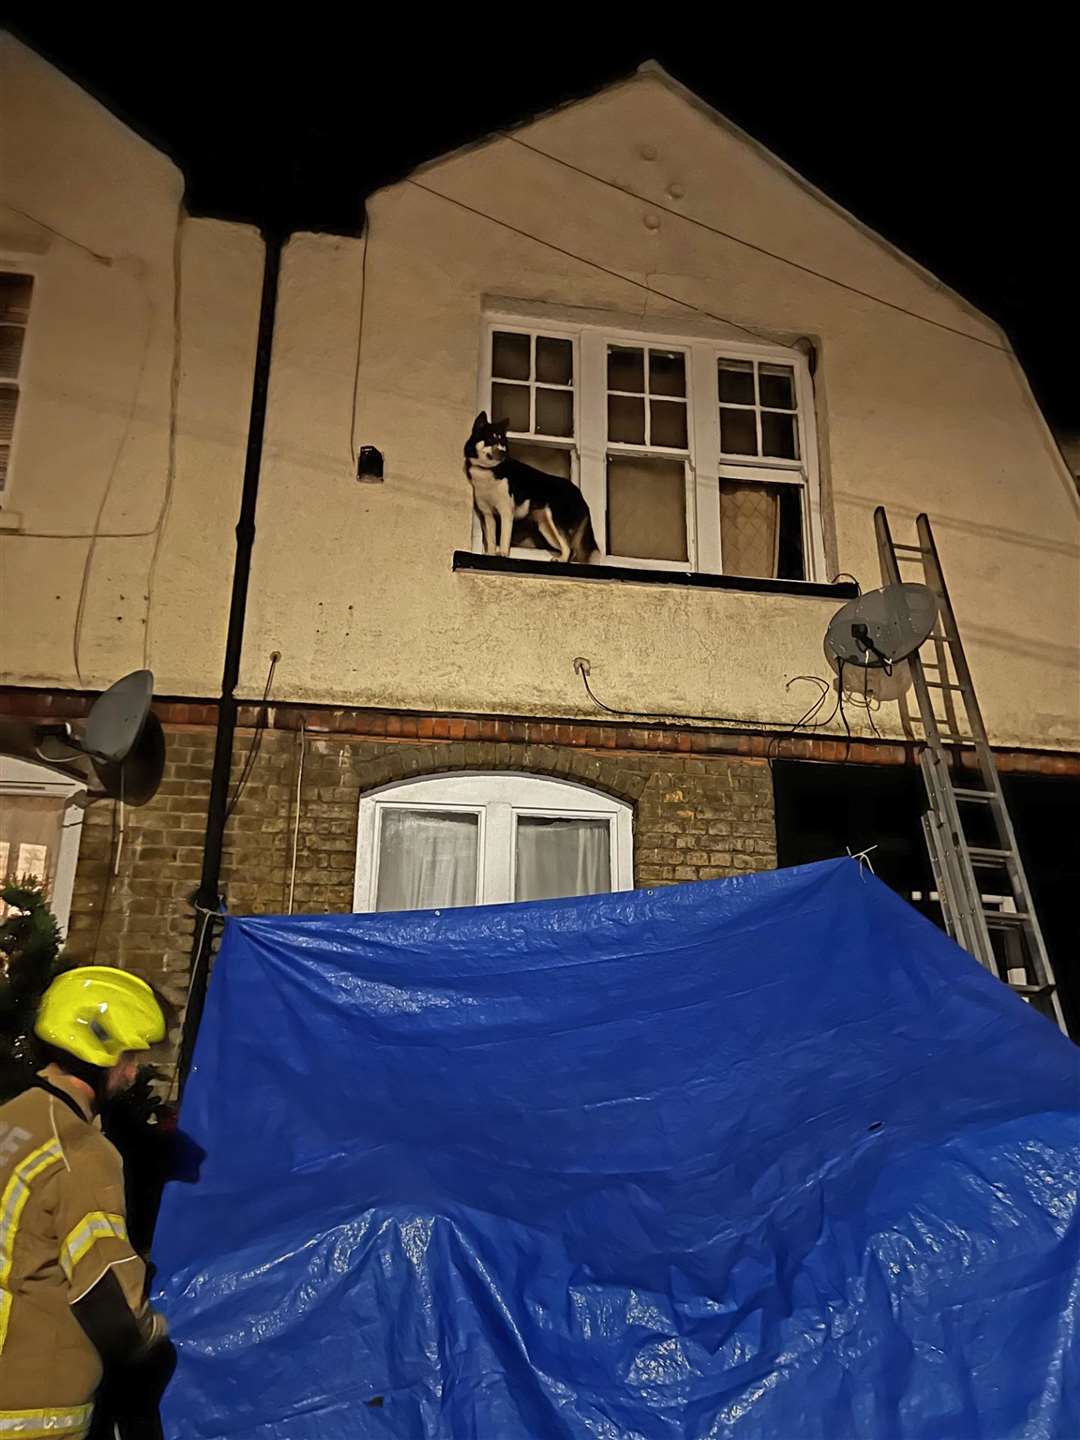 Coco stuck on the narrow ledge (London Fire Brigade/PA)